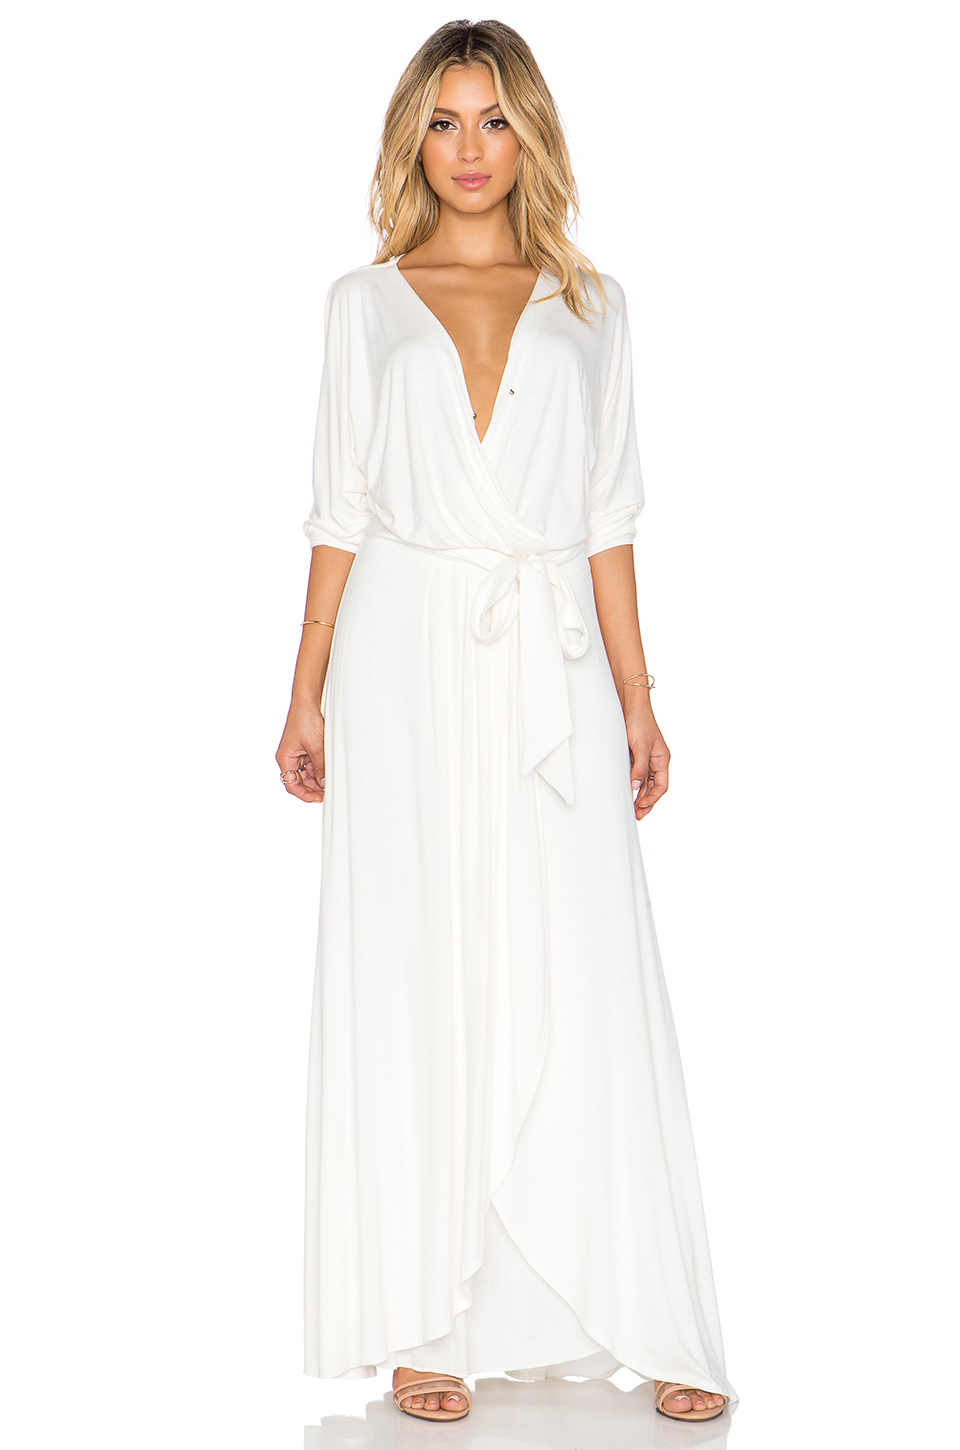 Lyst - David Lerner X Chiqui Delgado Belted Wrap Maxi Dress in White